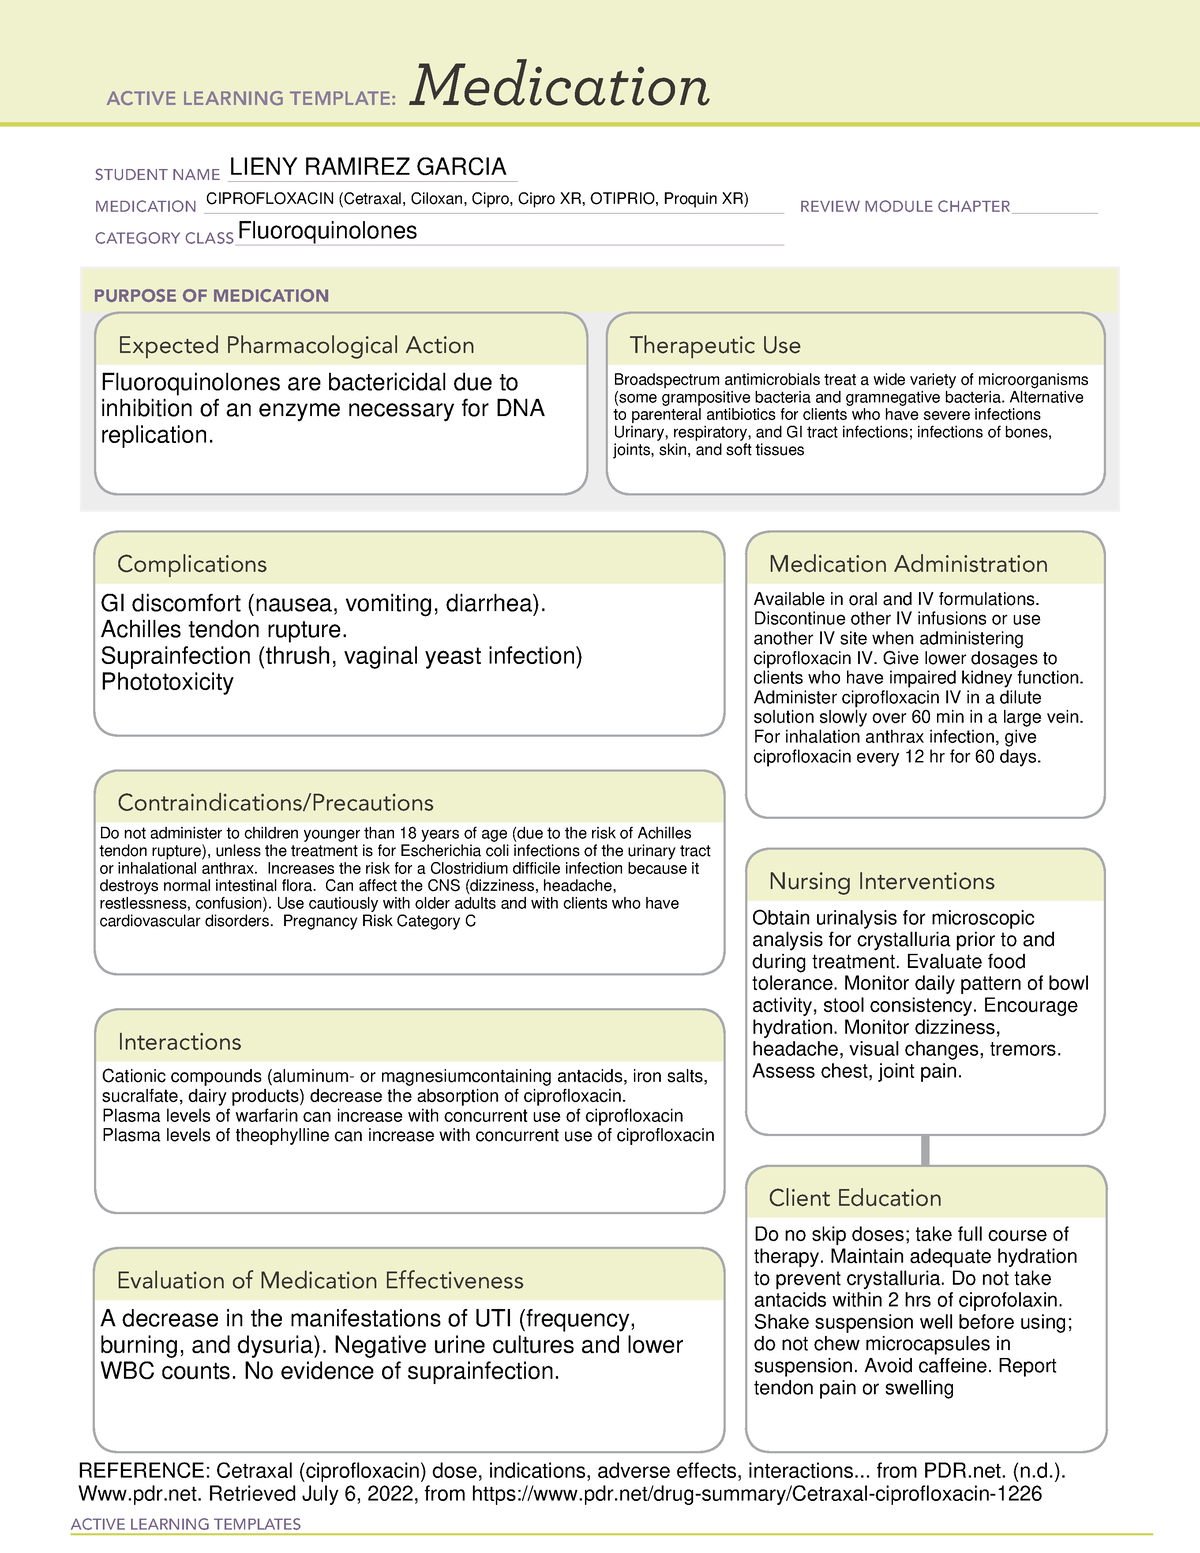 ciprofloxacin-med-cards-active-learning-templates-medication-student-name-studocu